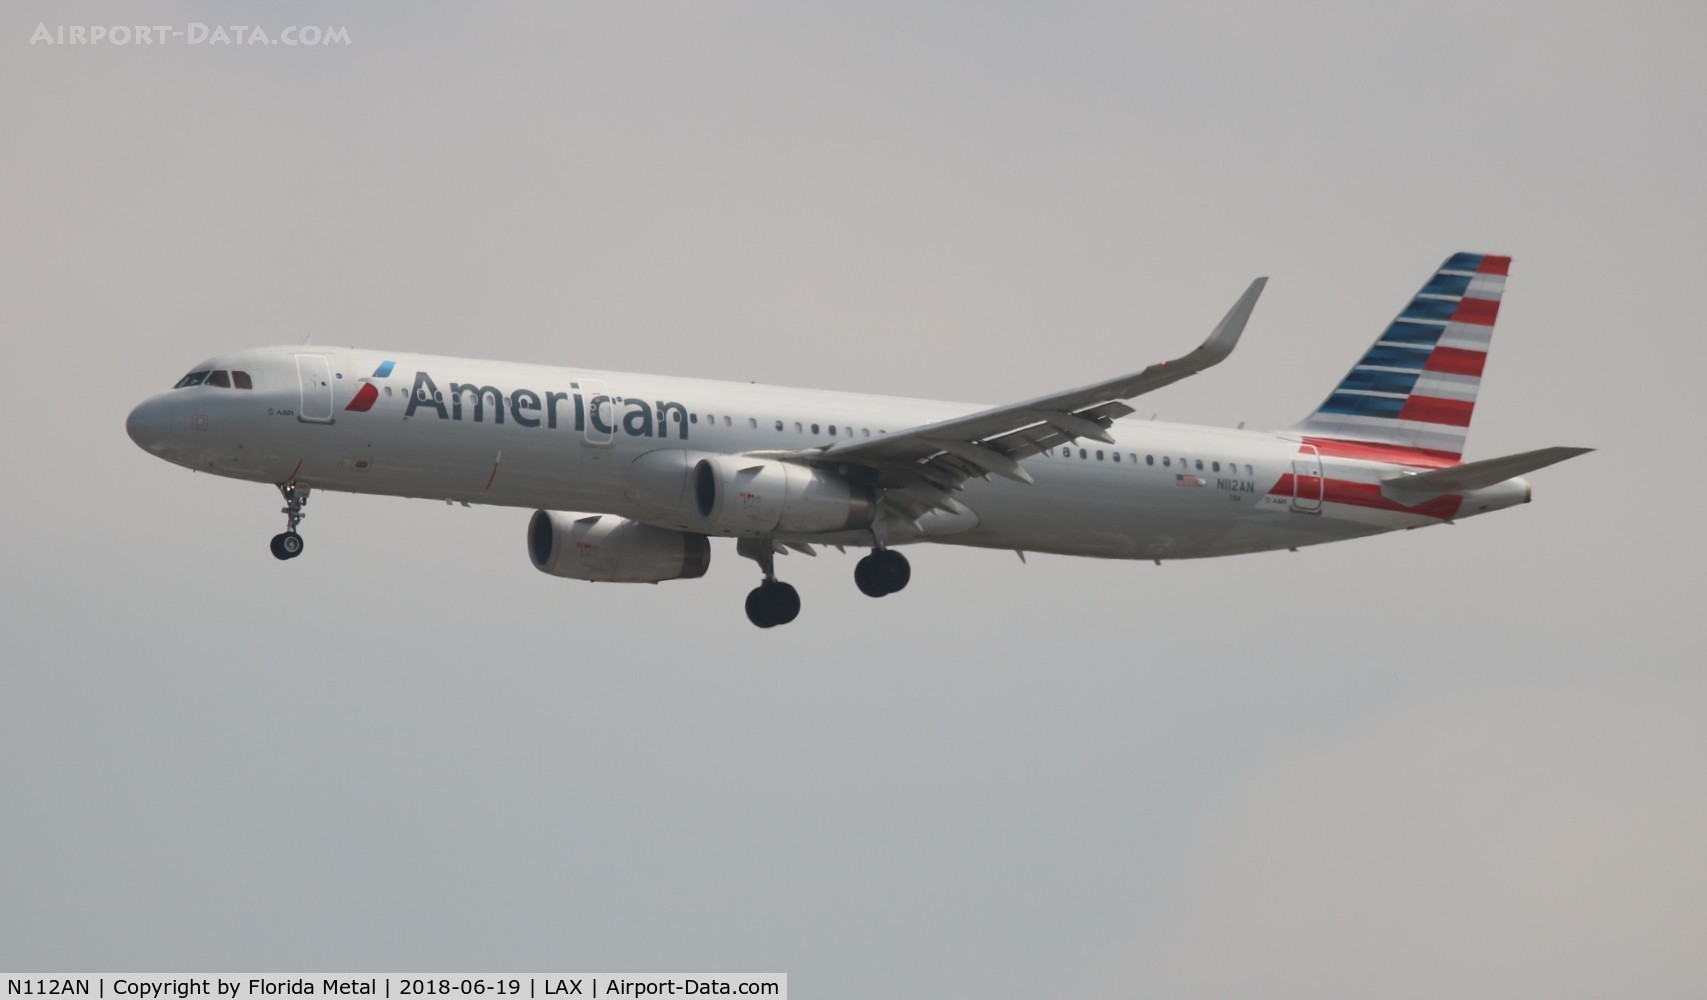 N112AN, 2014 Airbus A321-231 C/N 5991, American